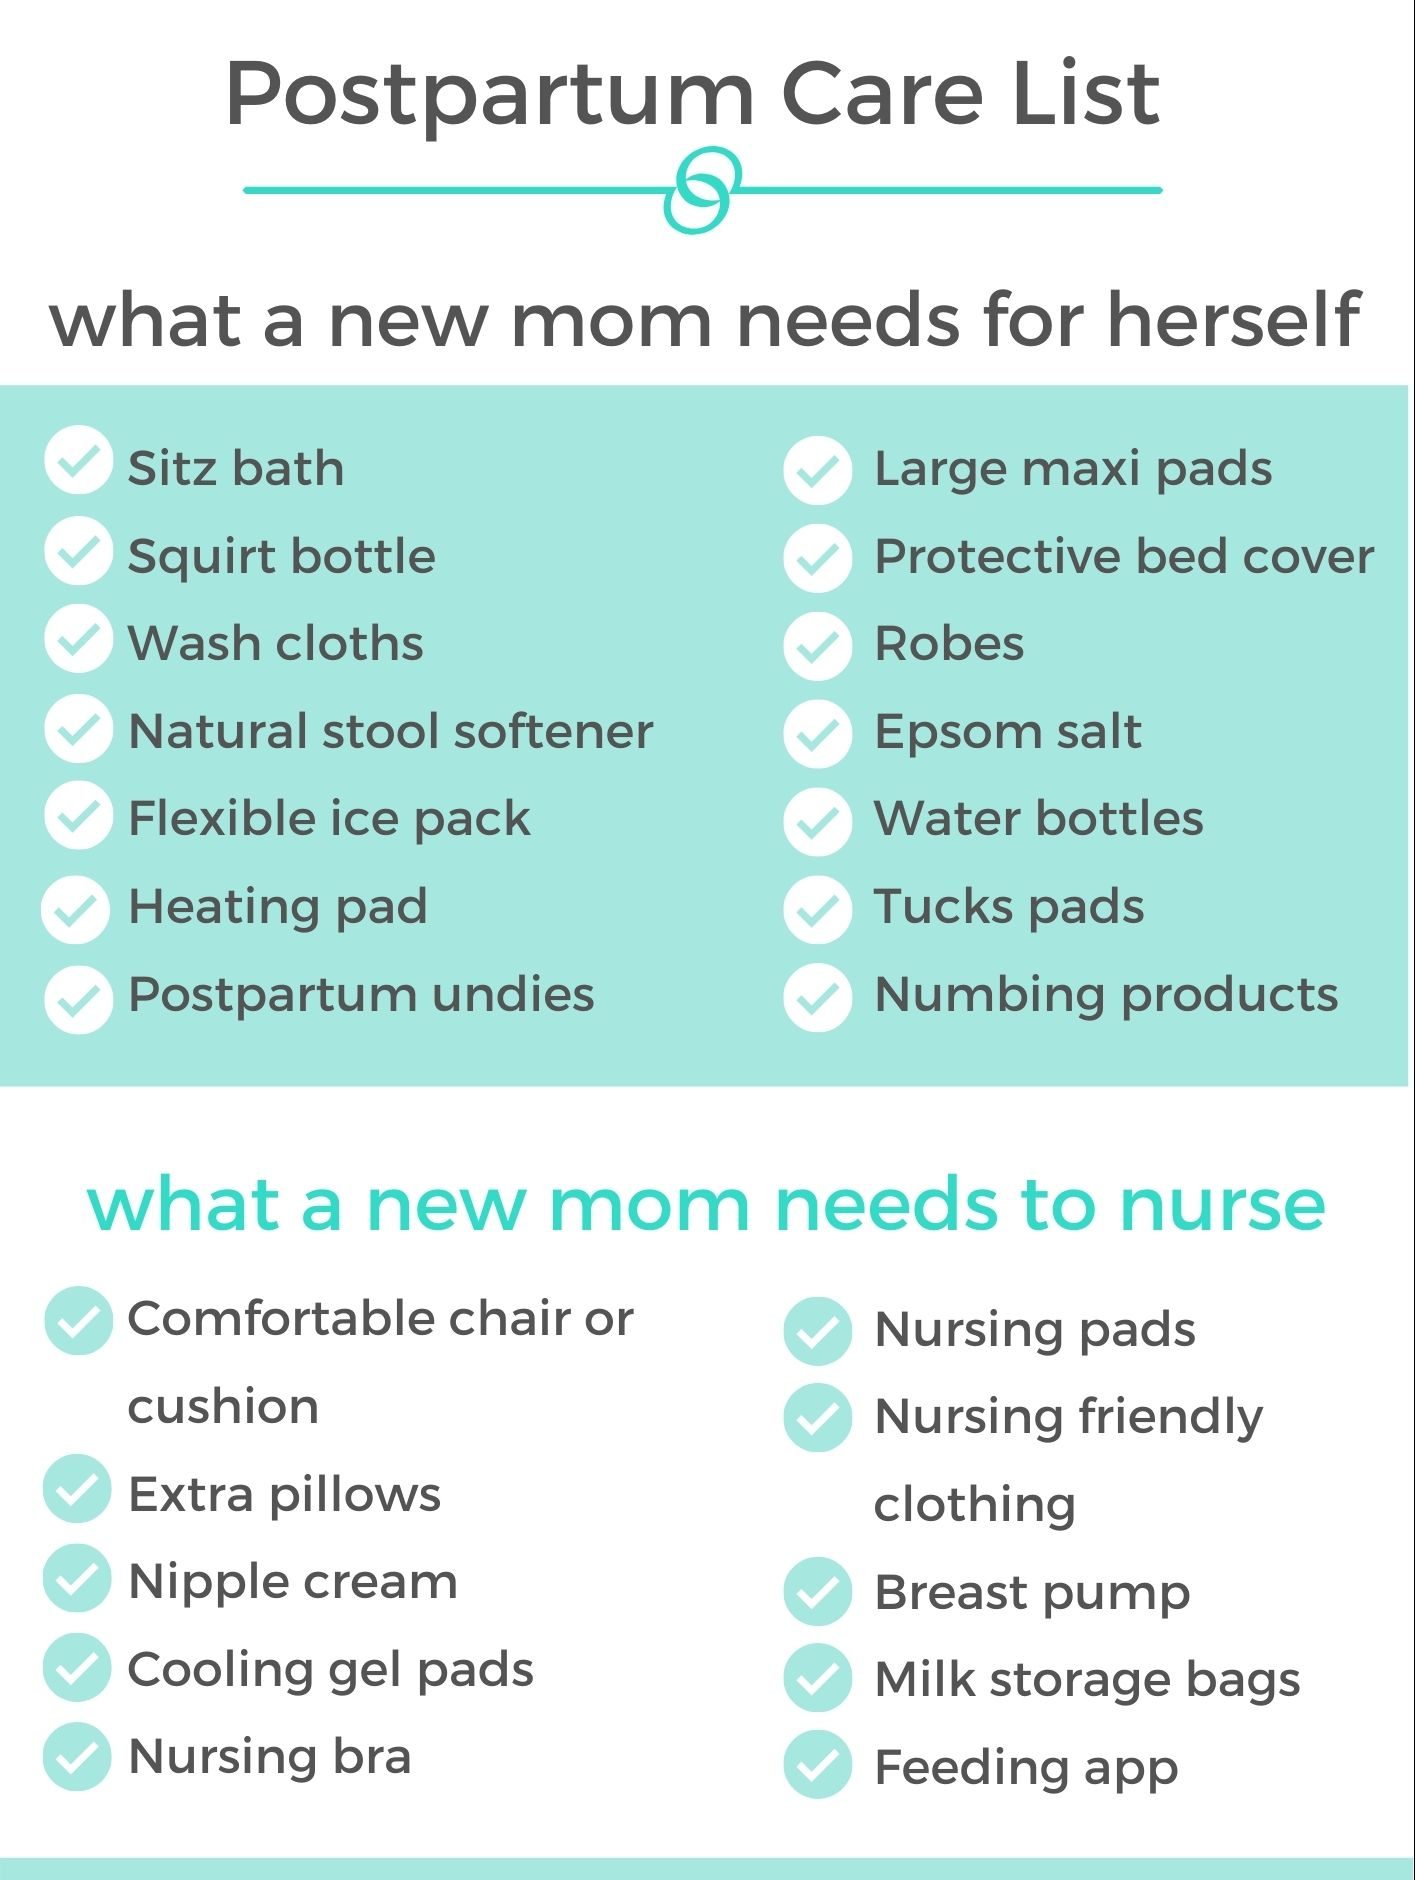 Let's talk mesh postpartum underwear from the hospital. #postpartum #